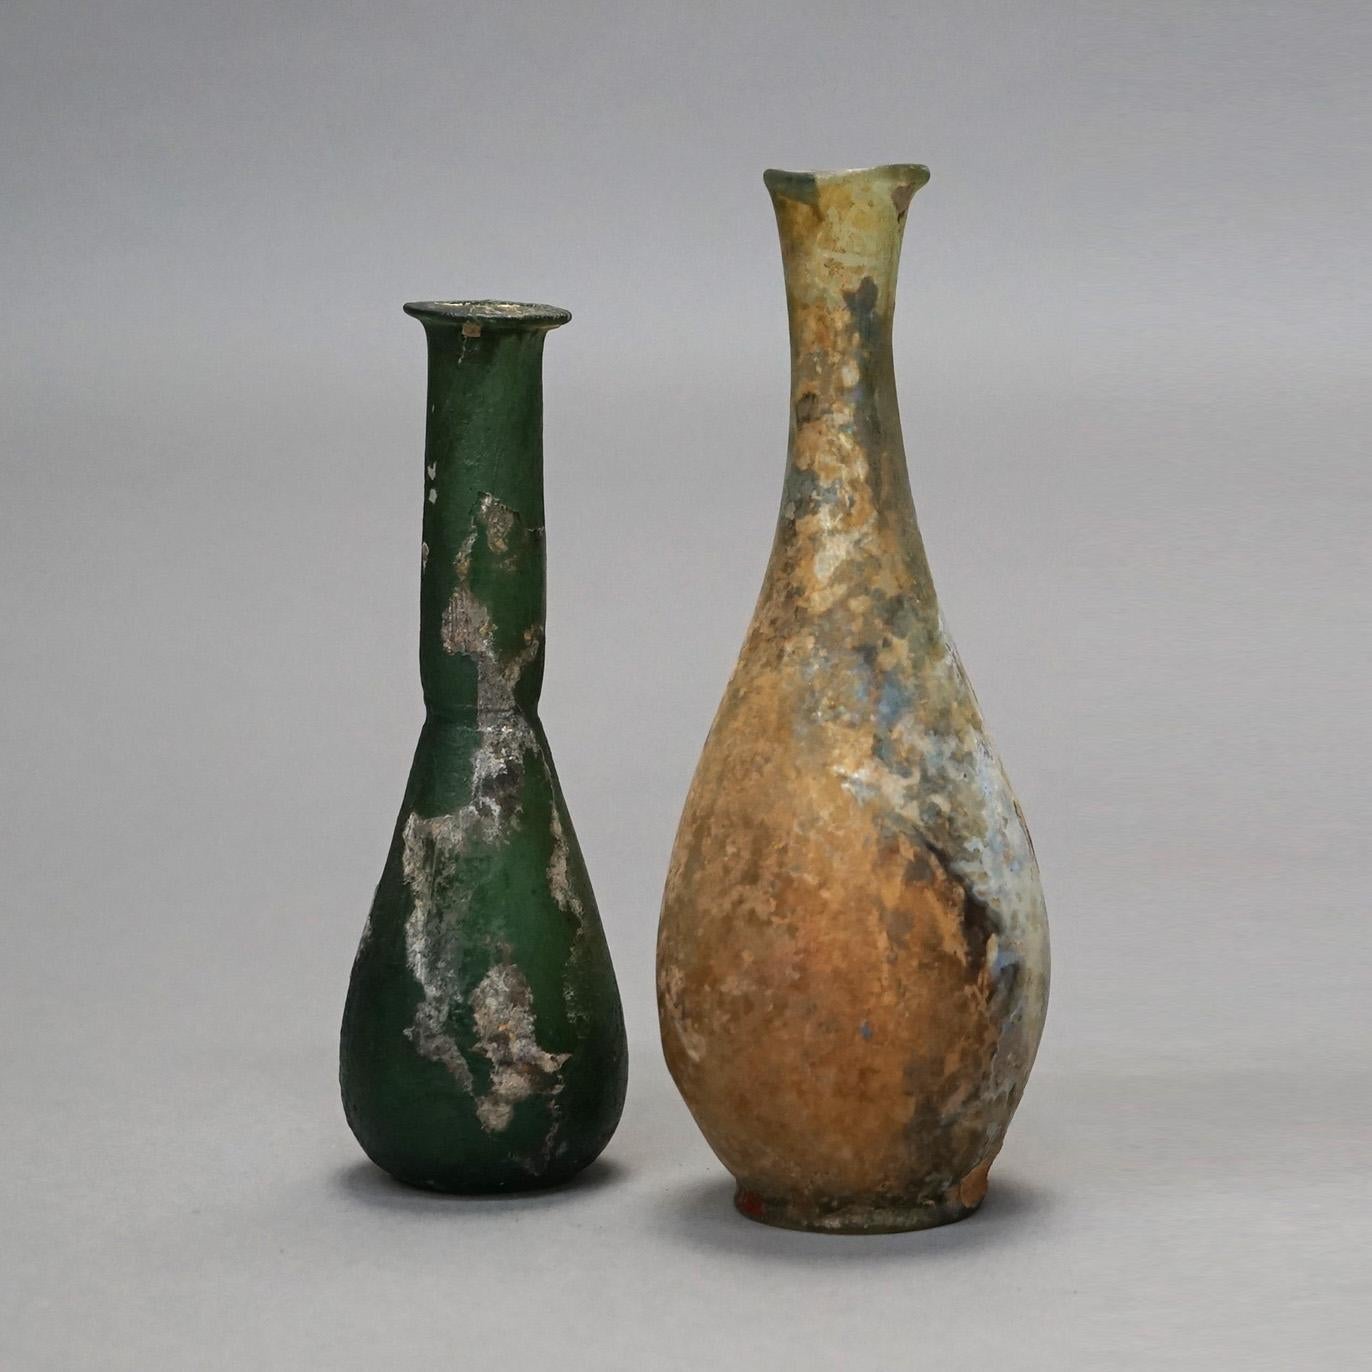 Two Antique Roman Glass Vases, 18thC

Measure - Taller 6.25